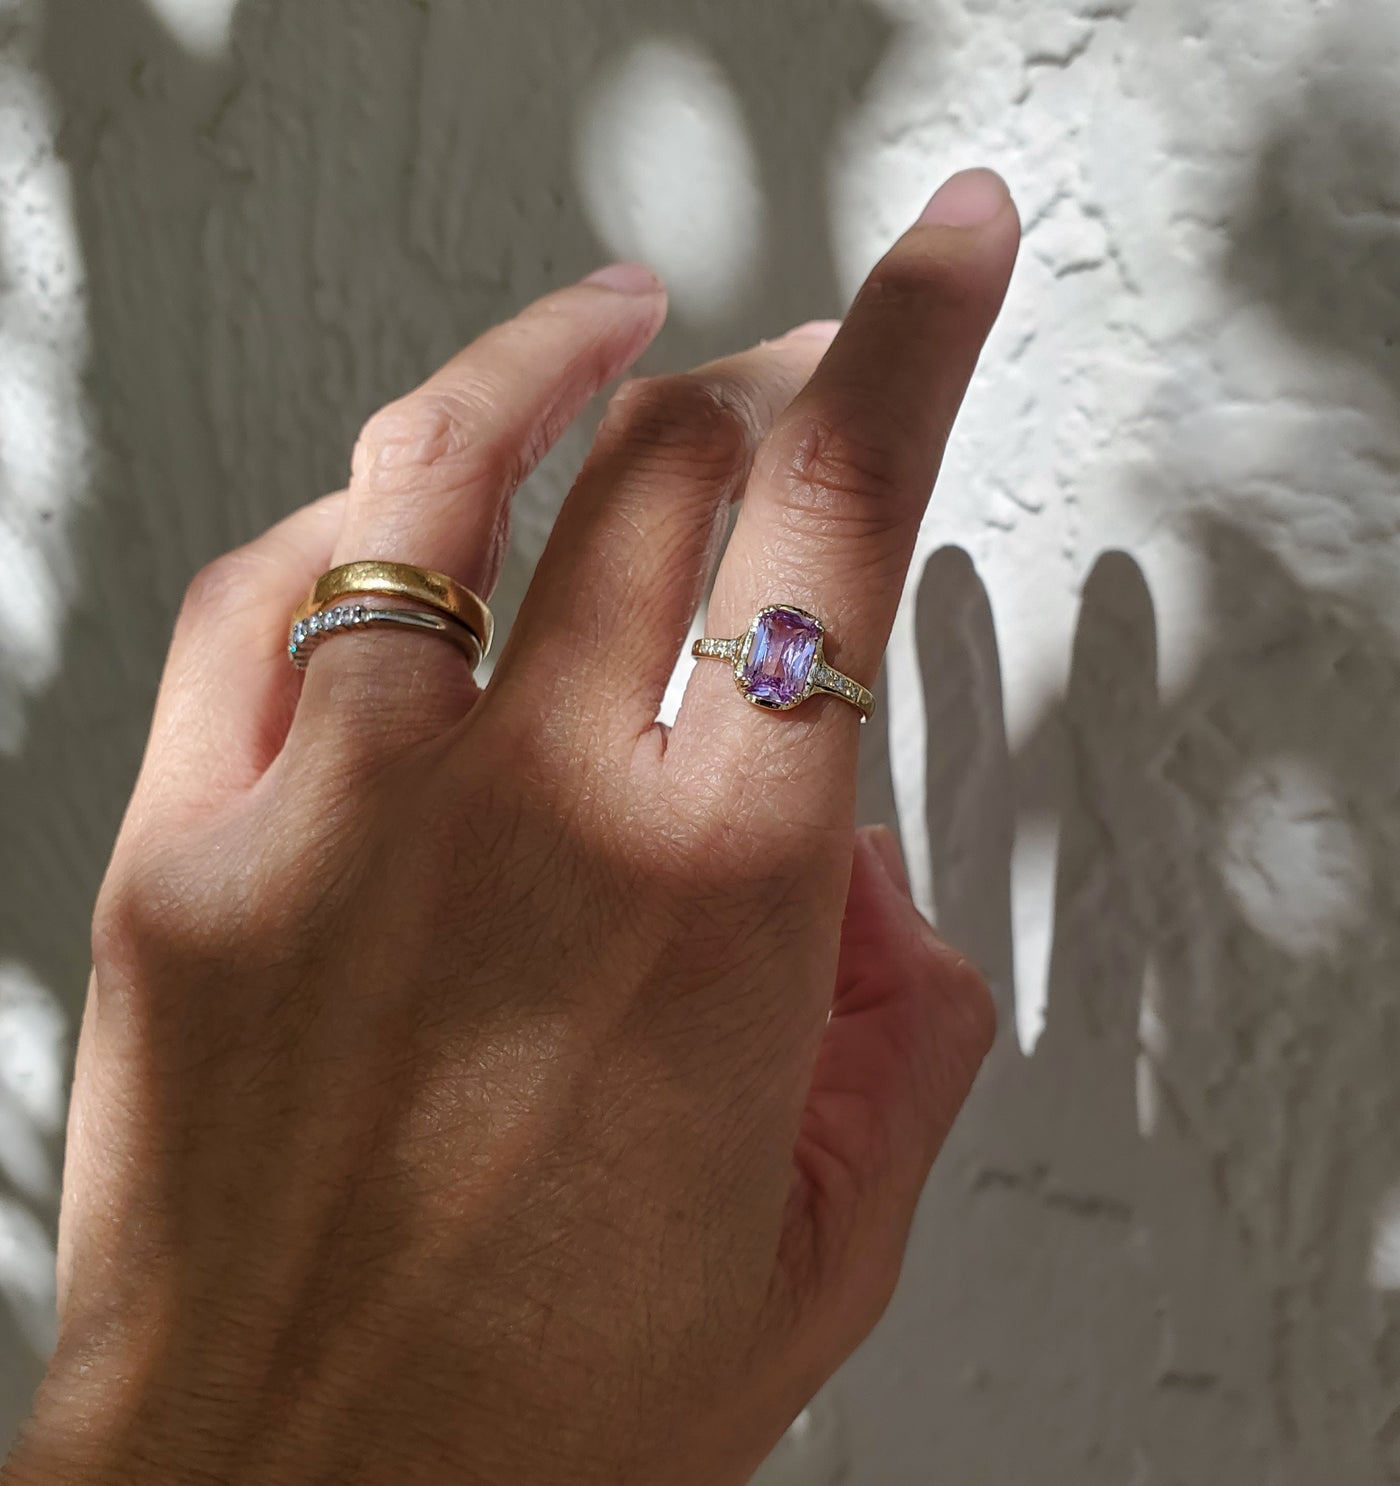 Royal Lavender Pink Sapphire Ring